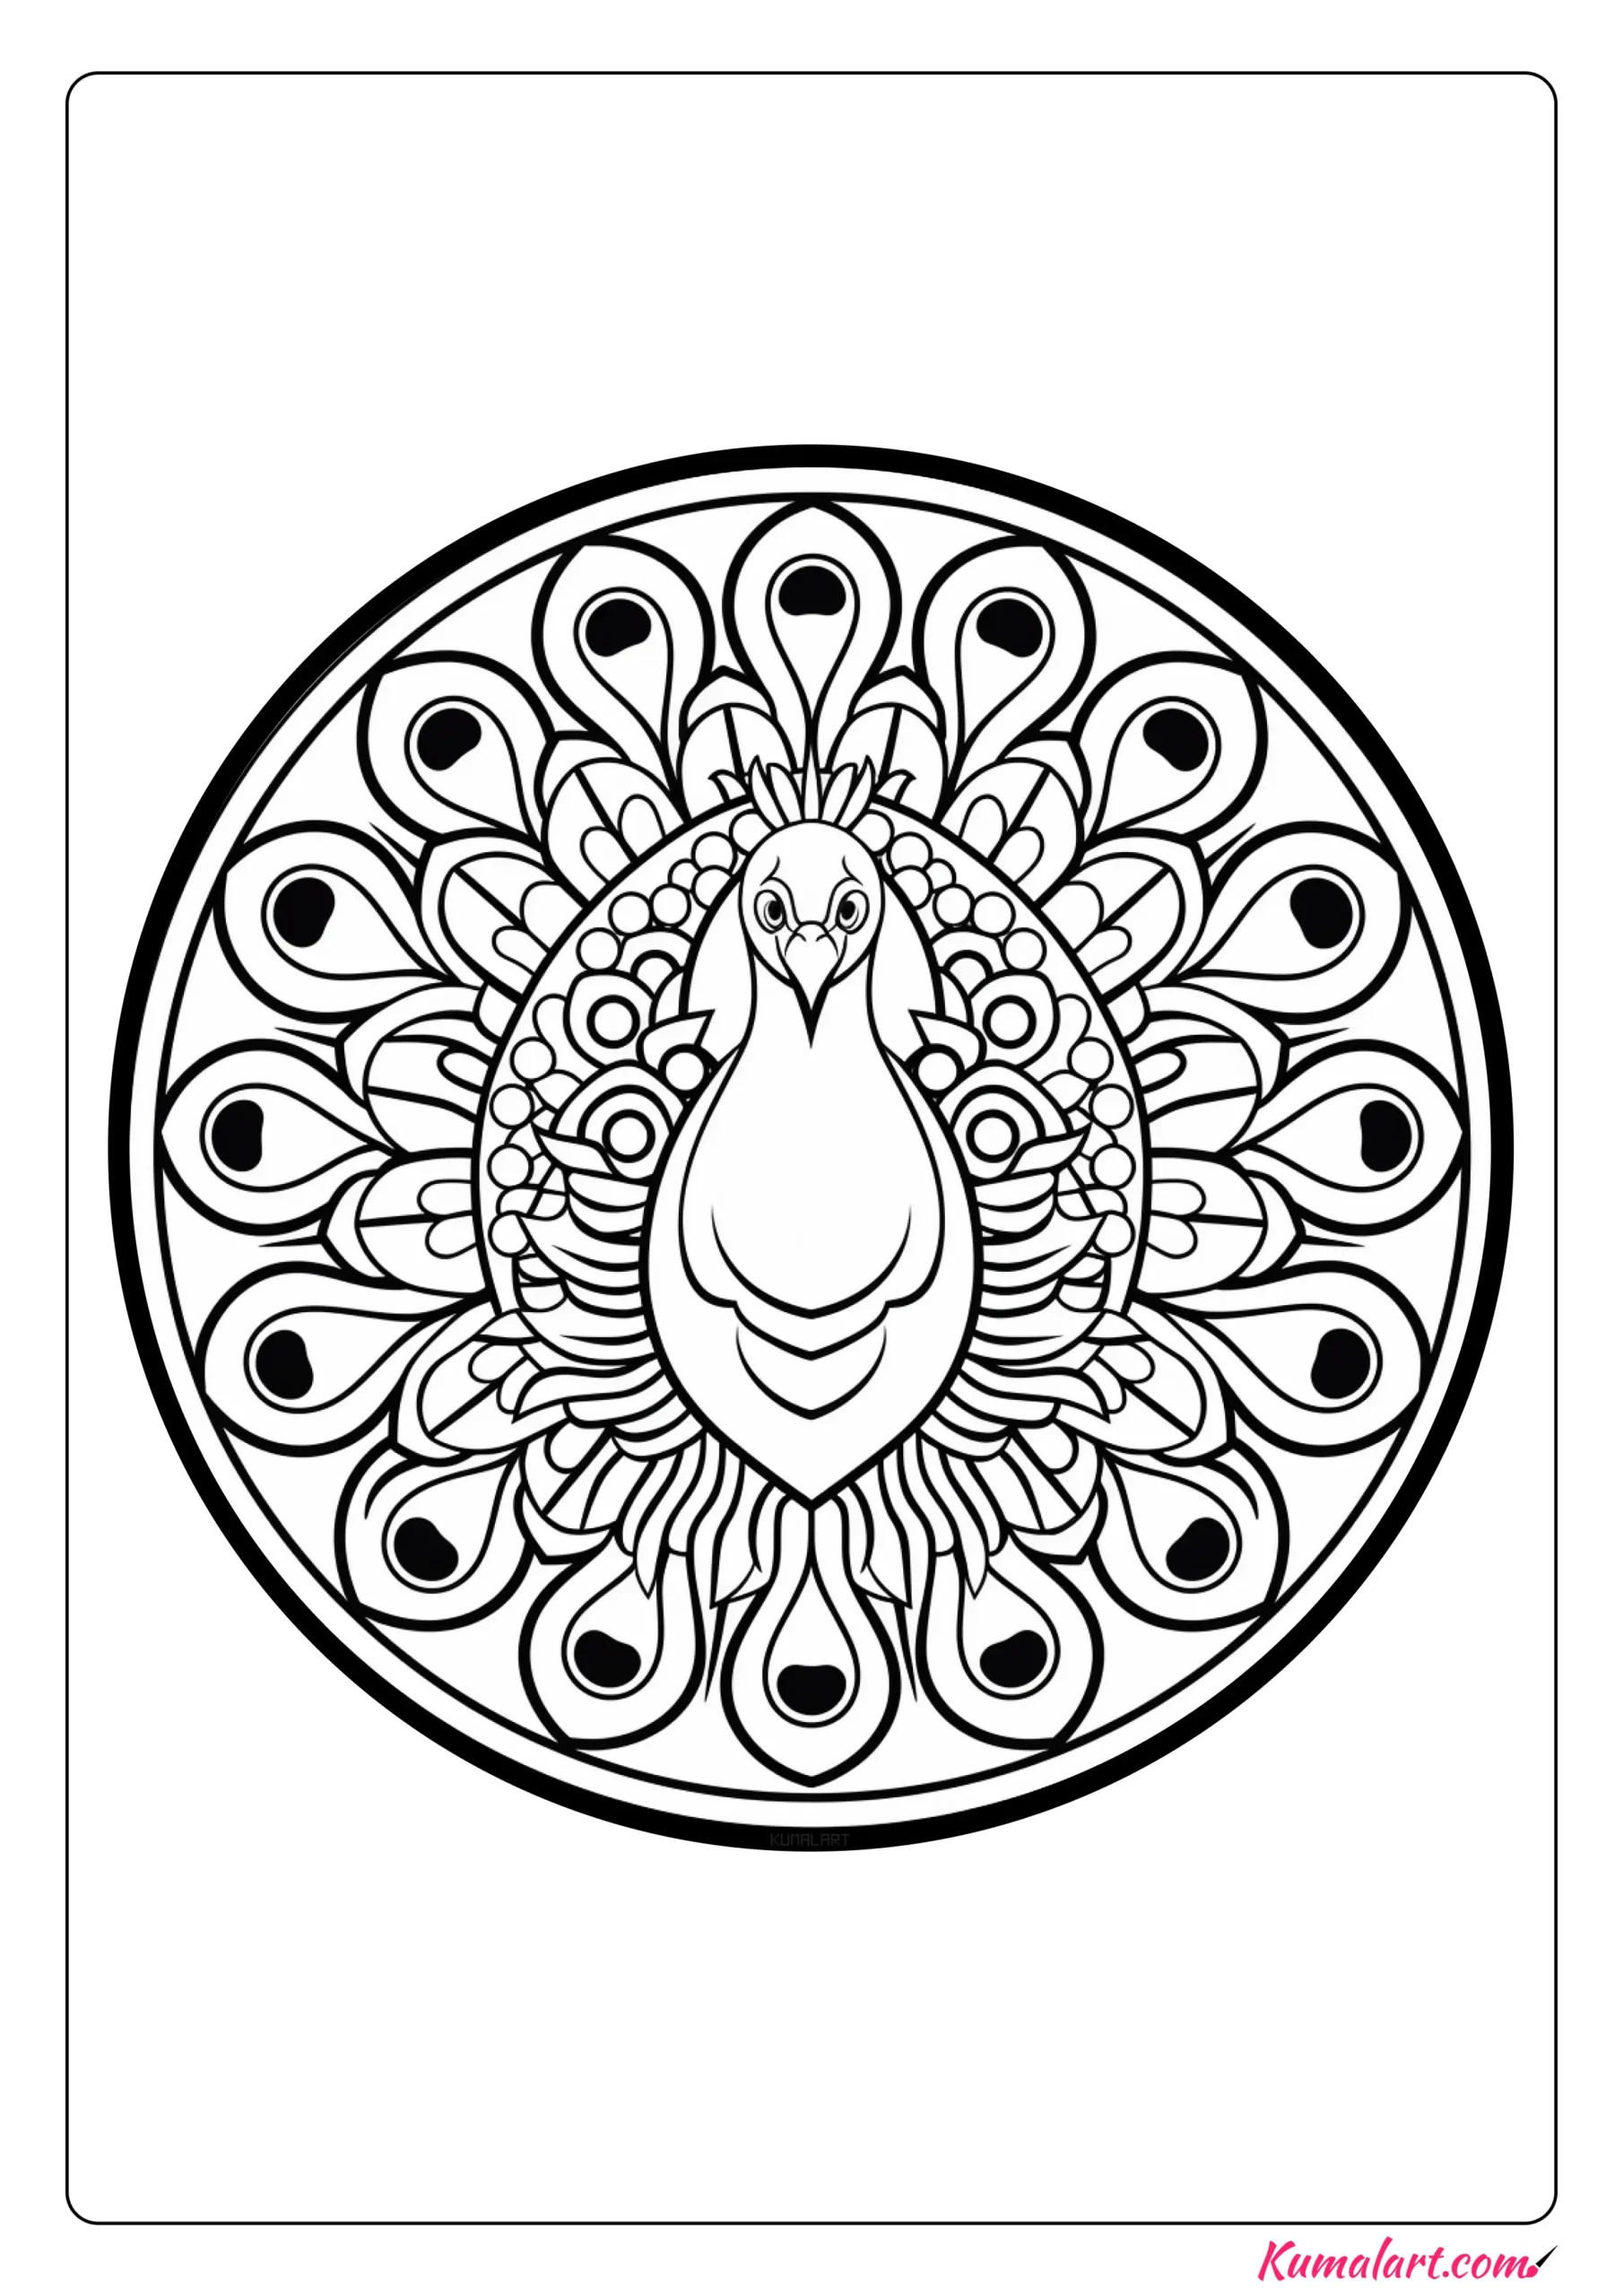 Amelia the Peacock Mandala Coloring Page